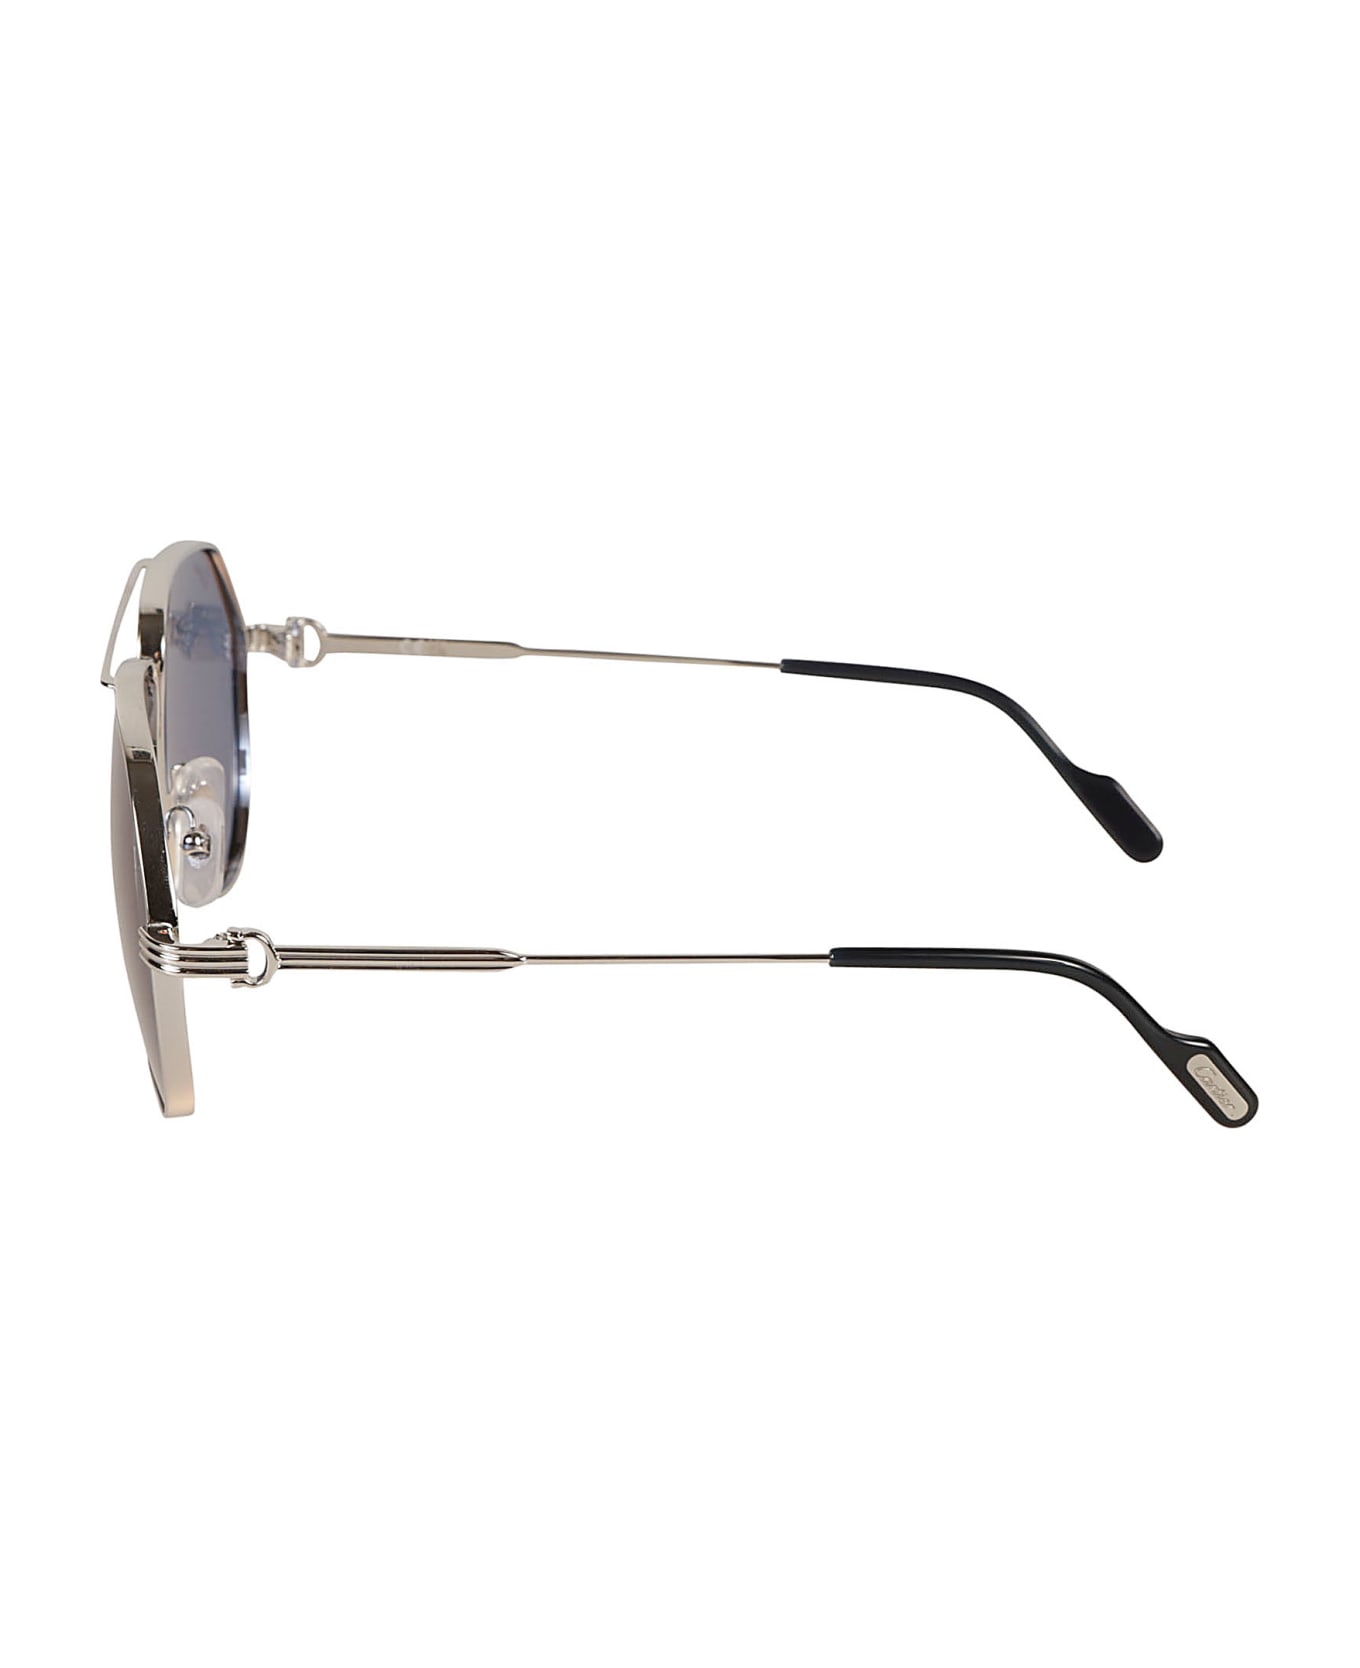 Cartier Eyewear Aviator Classic Sunglasses Sunglasses - silver